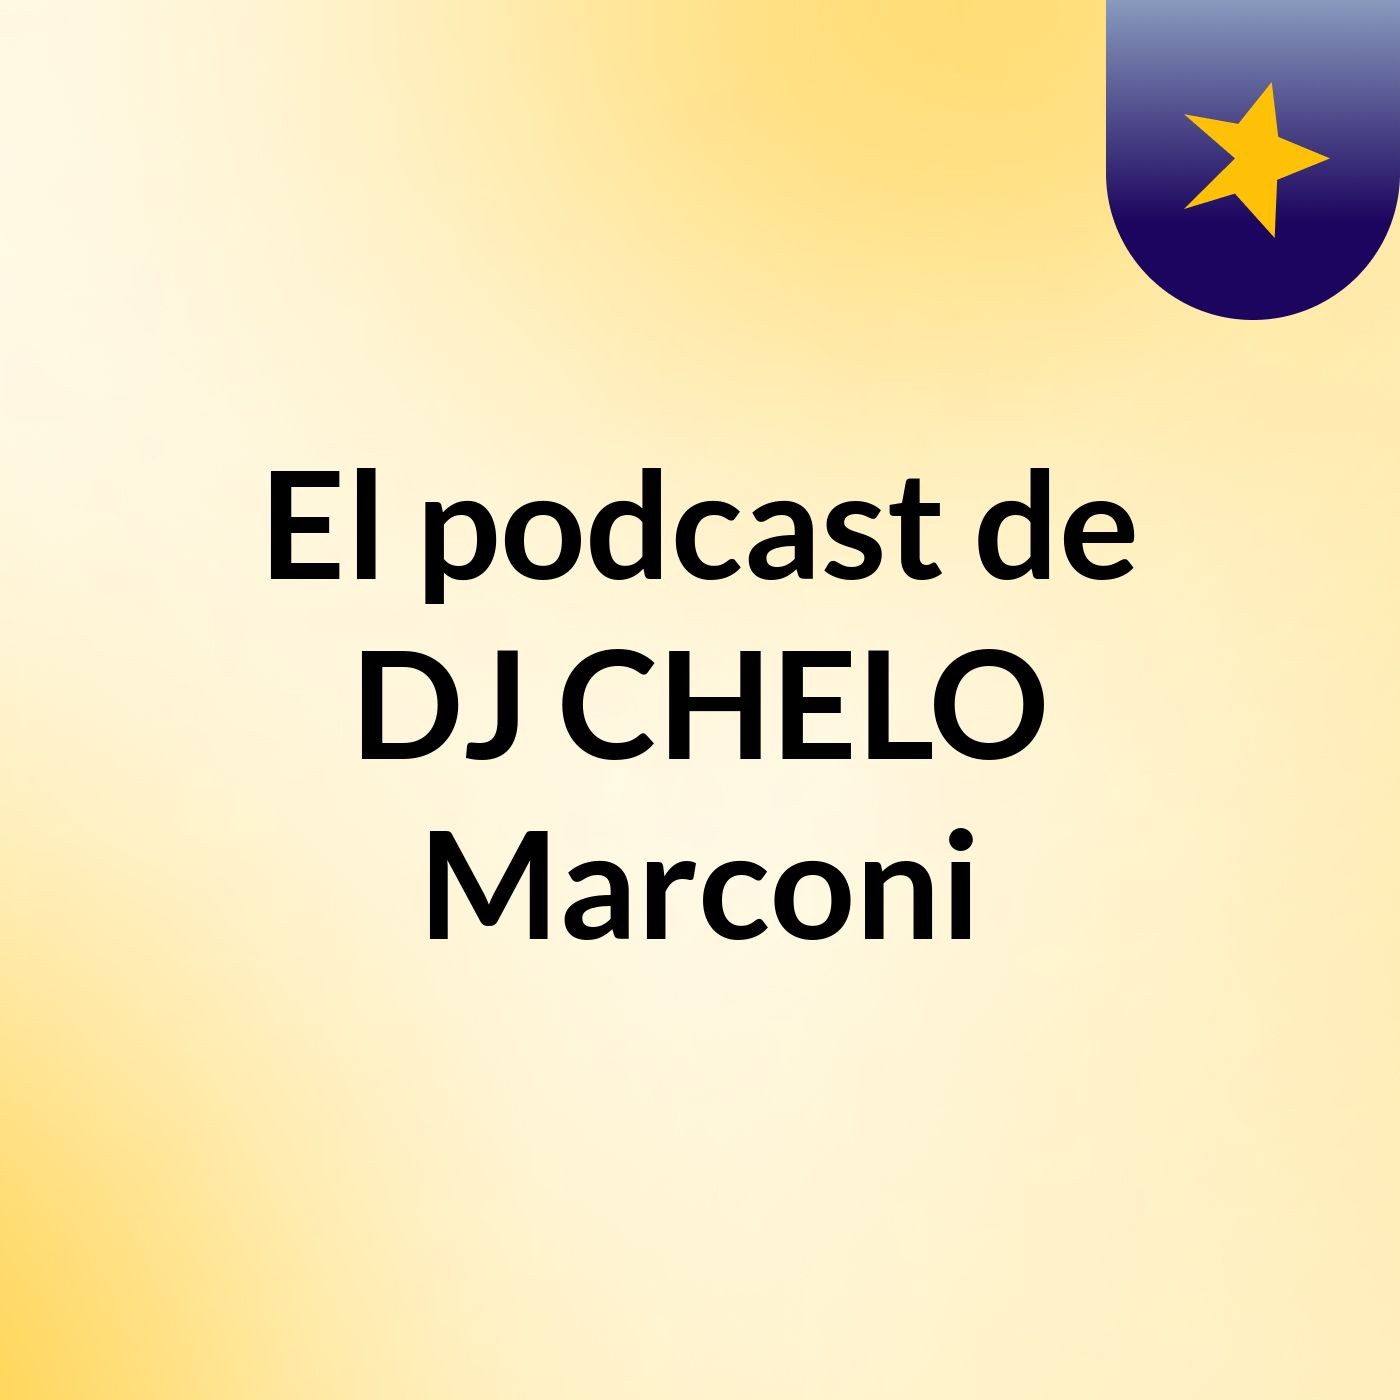 El podcast de DJ CHELO Marconi